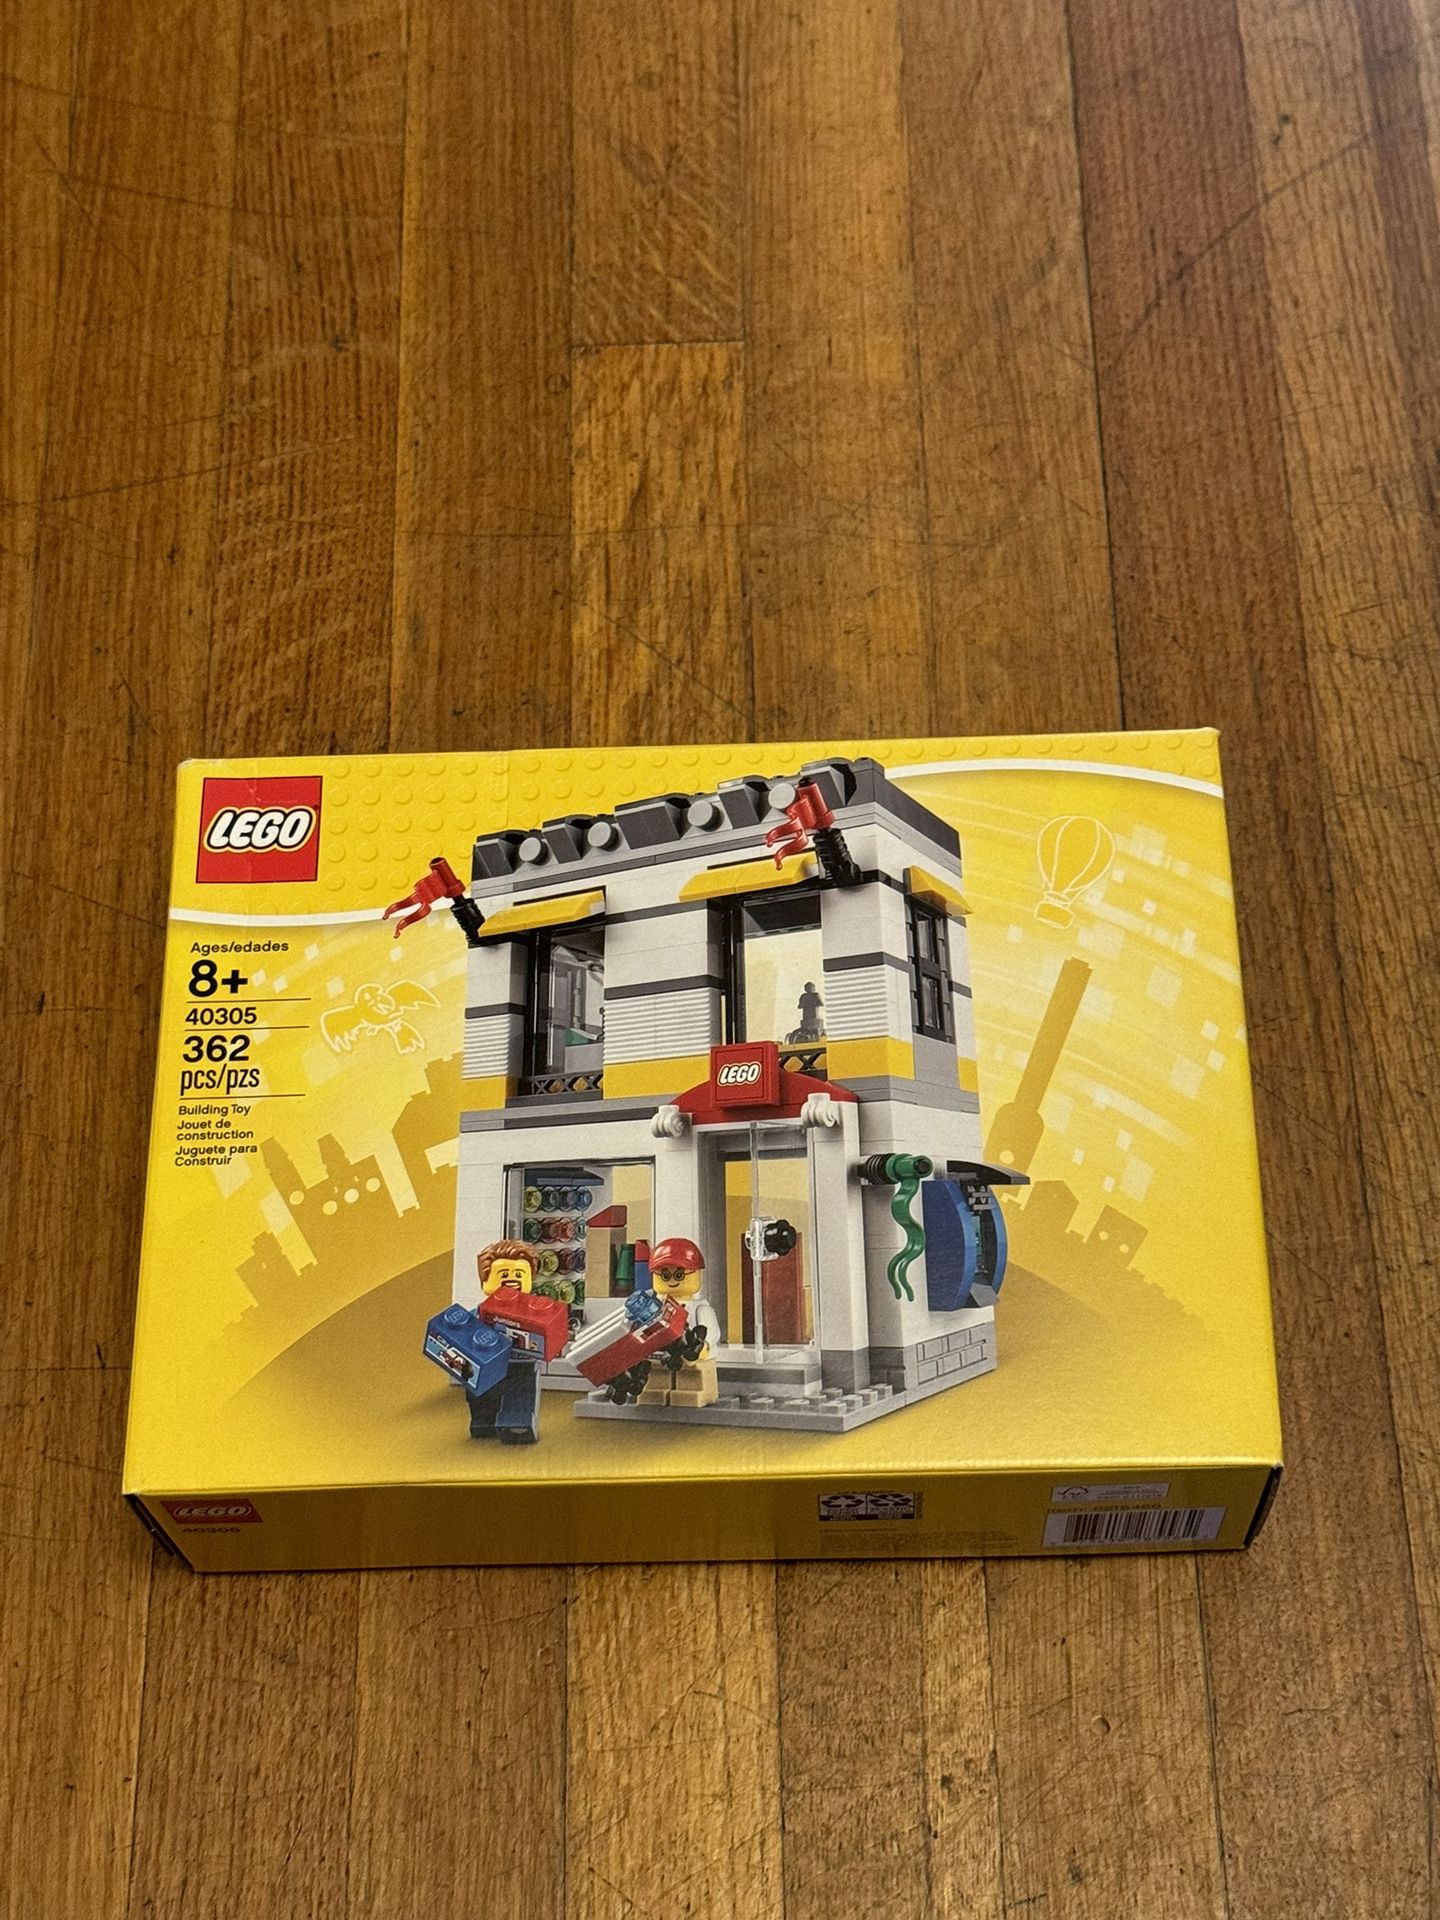 Lego LEGO Brand Retail Store (40305) Brand new